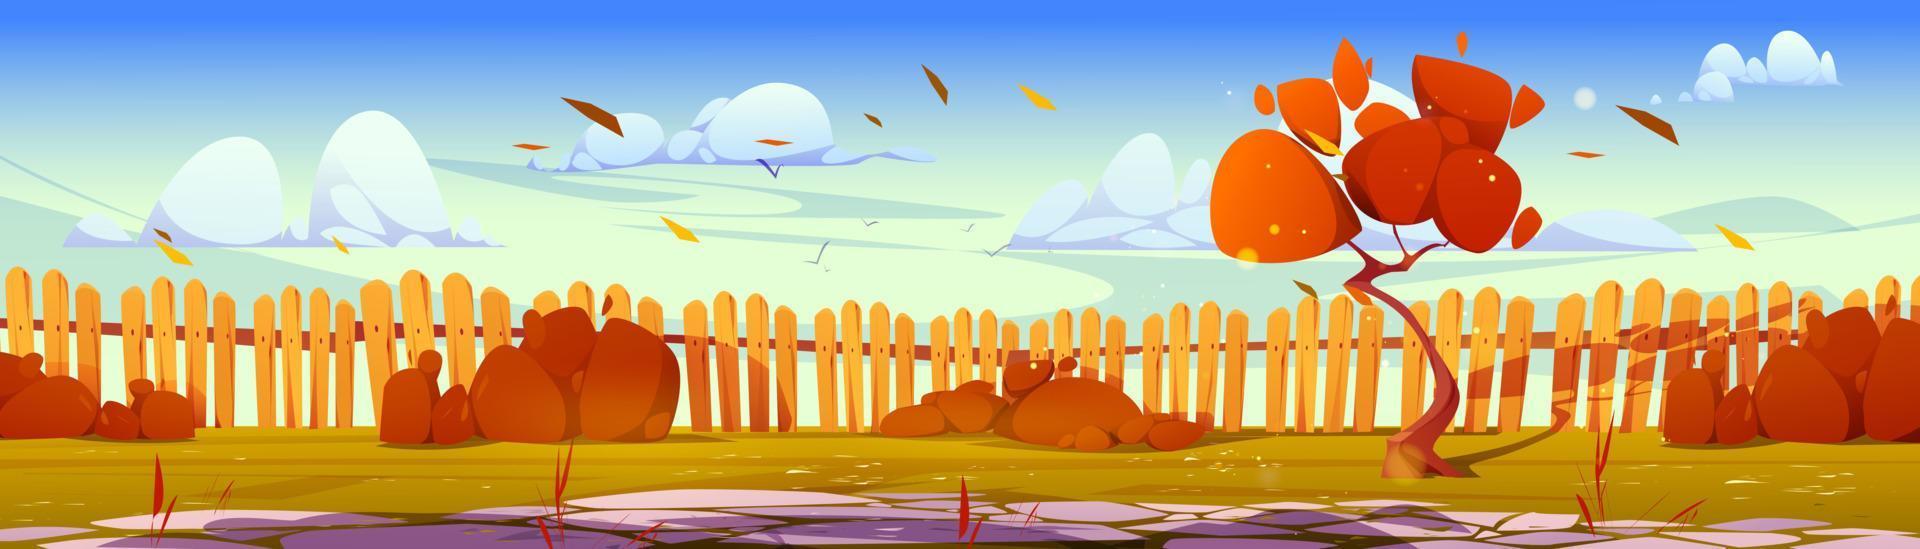 Autumn backyard garden with fence illustration vector